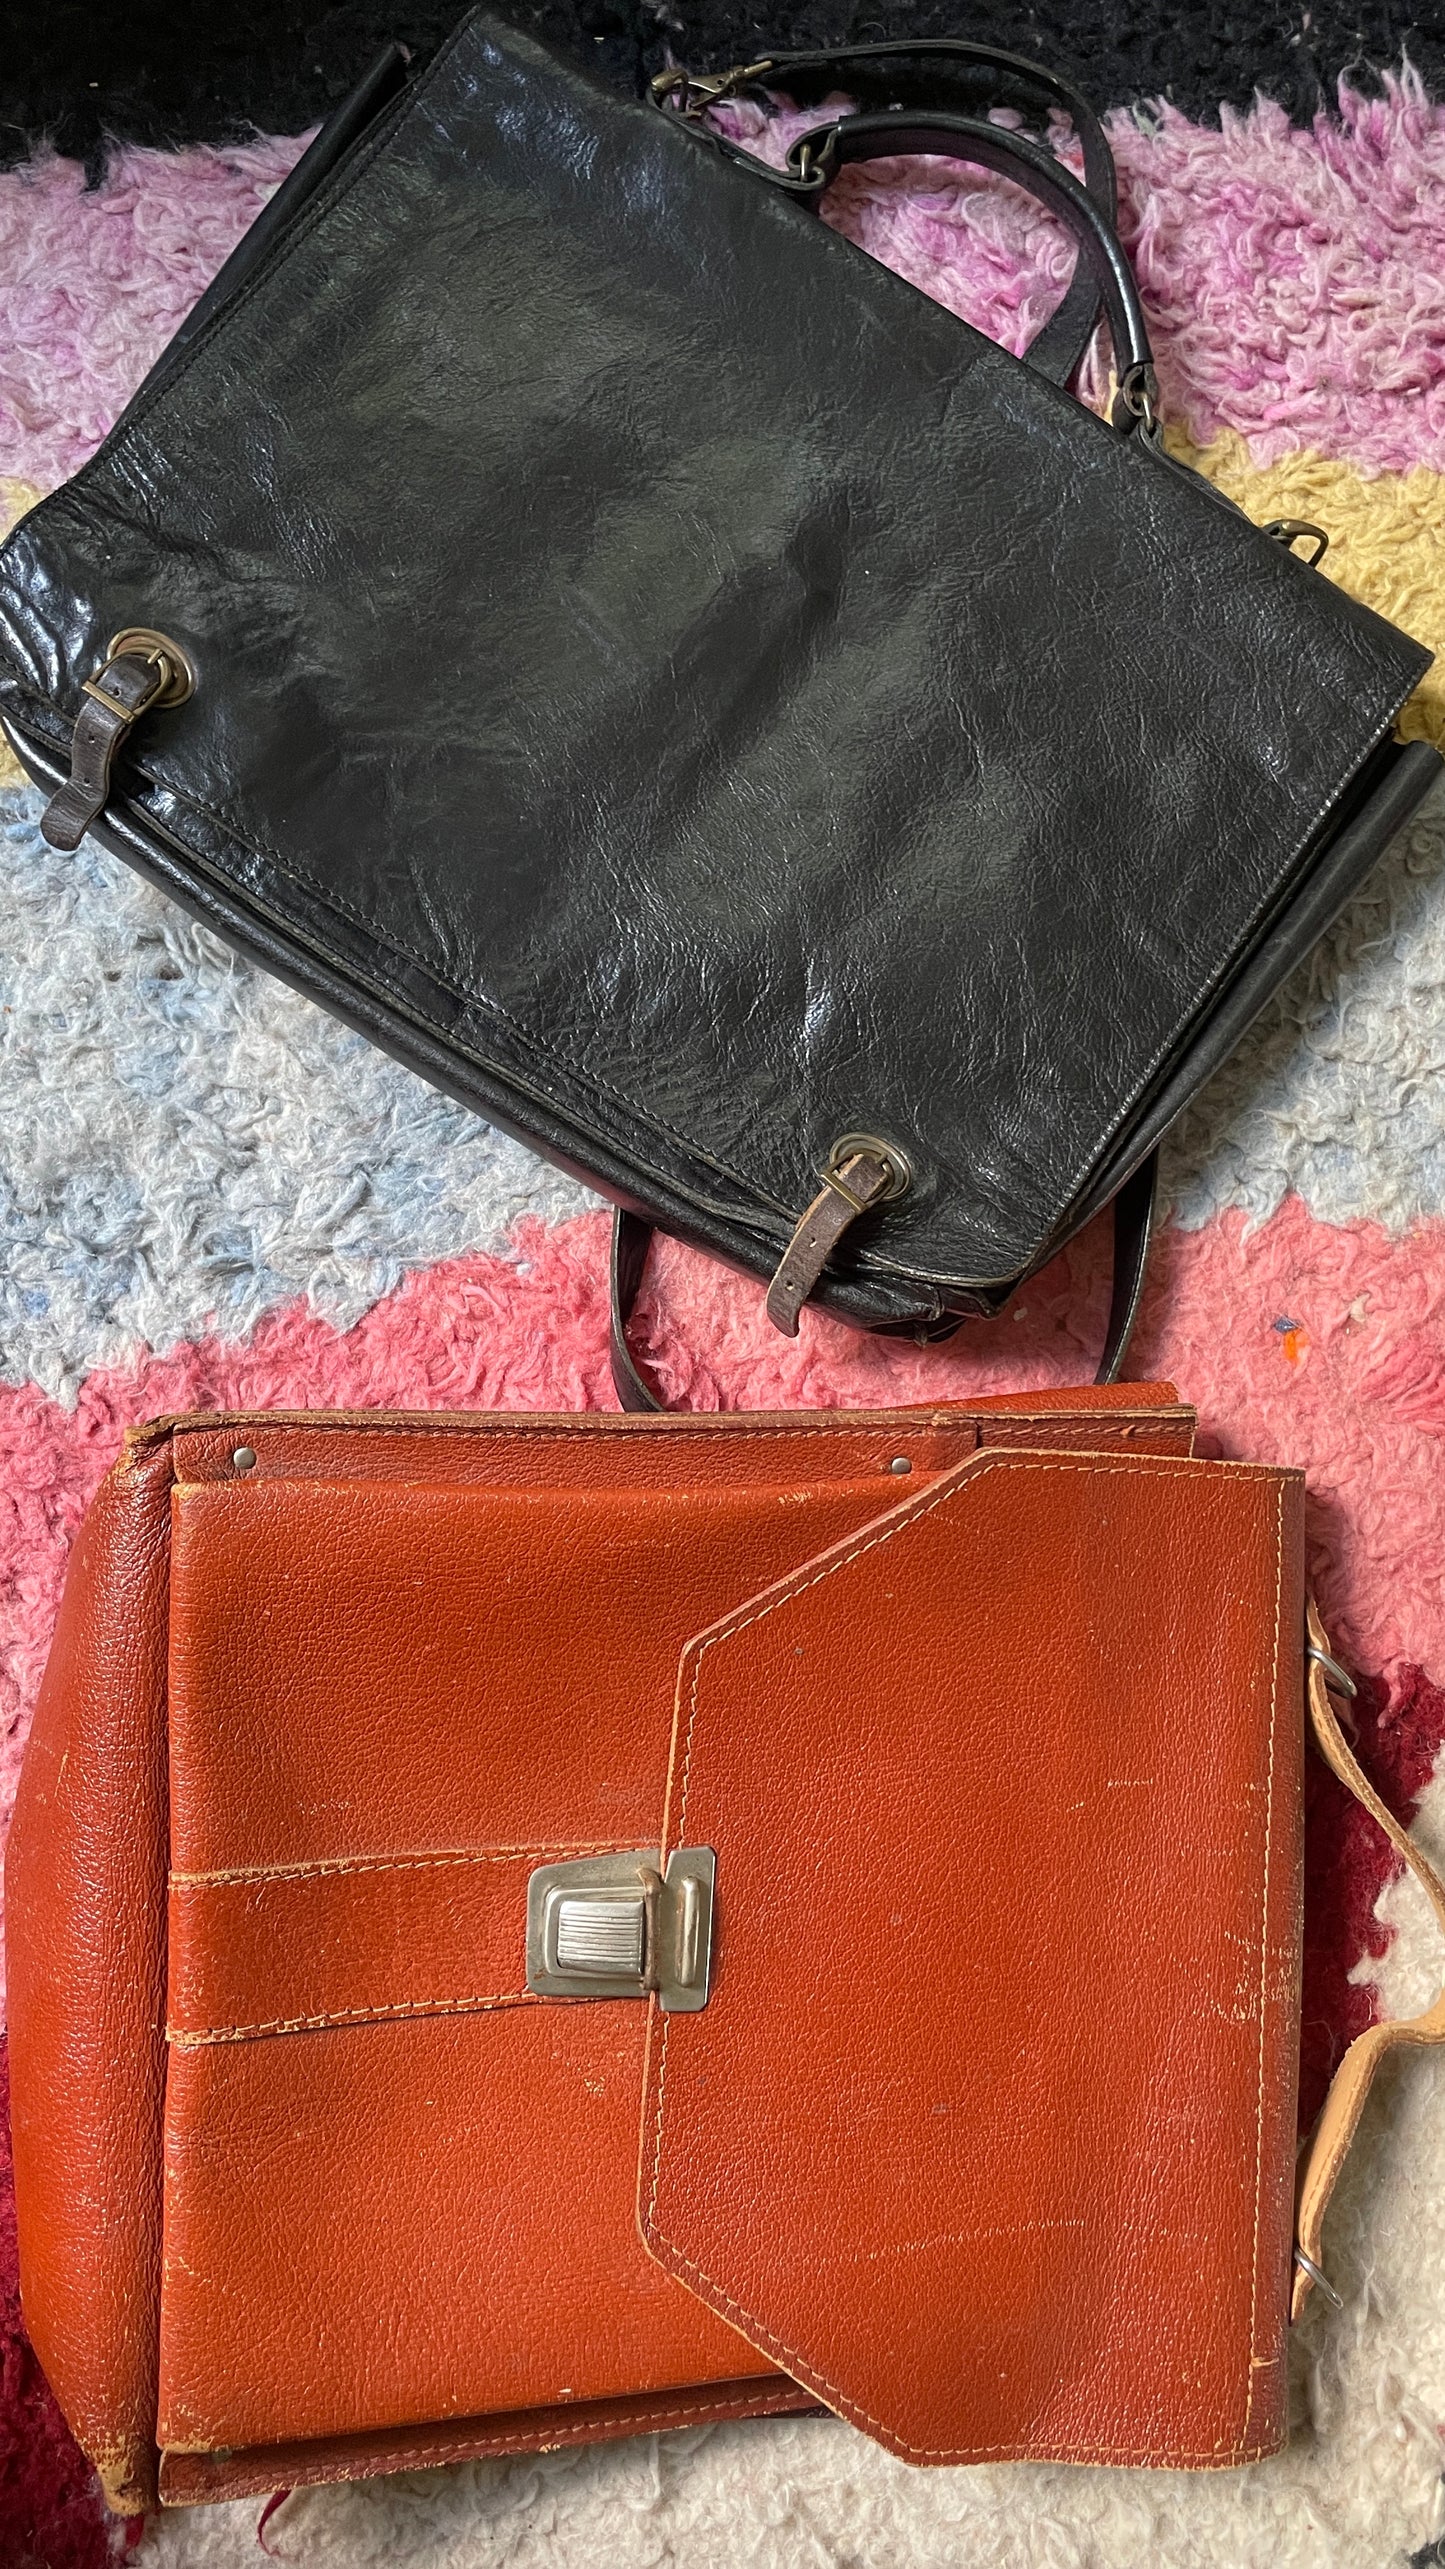 Leather Study Bag